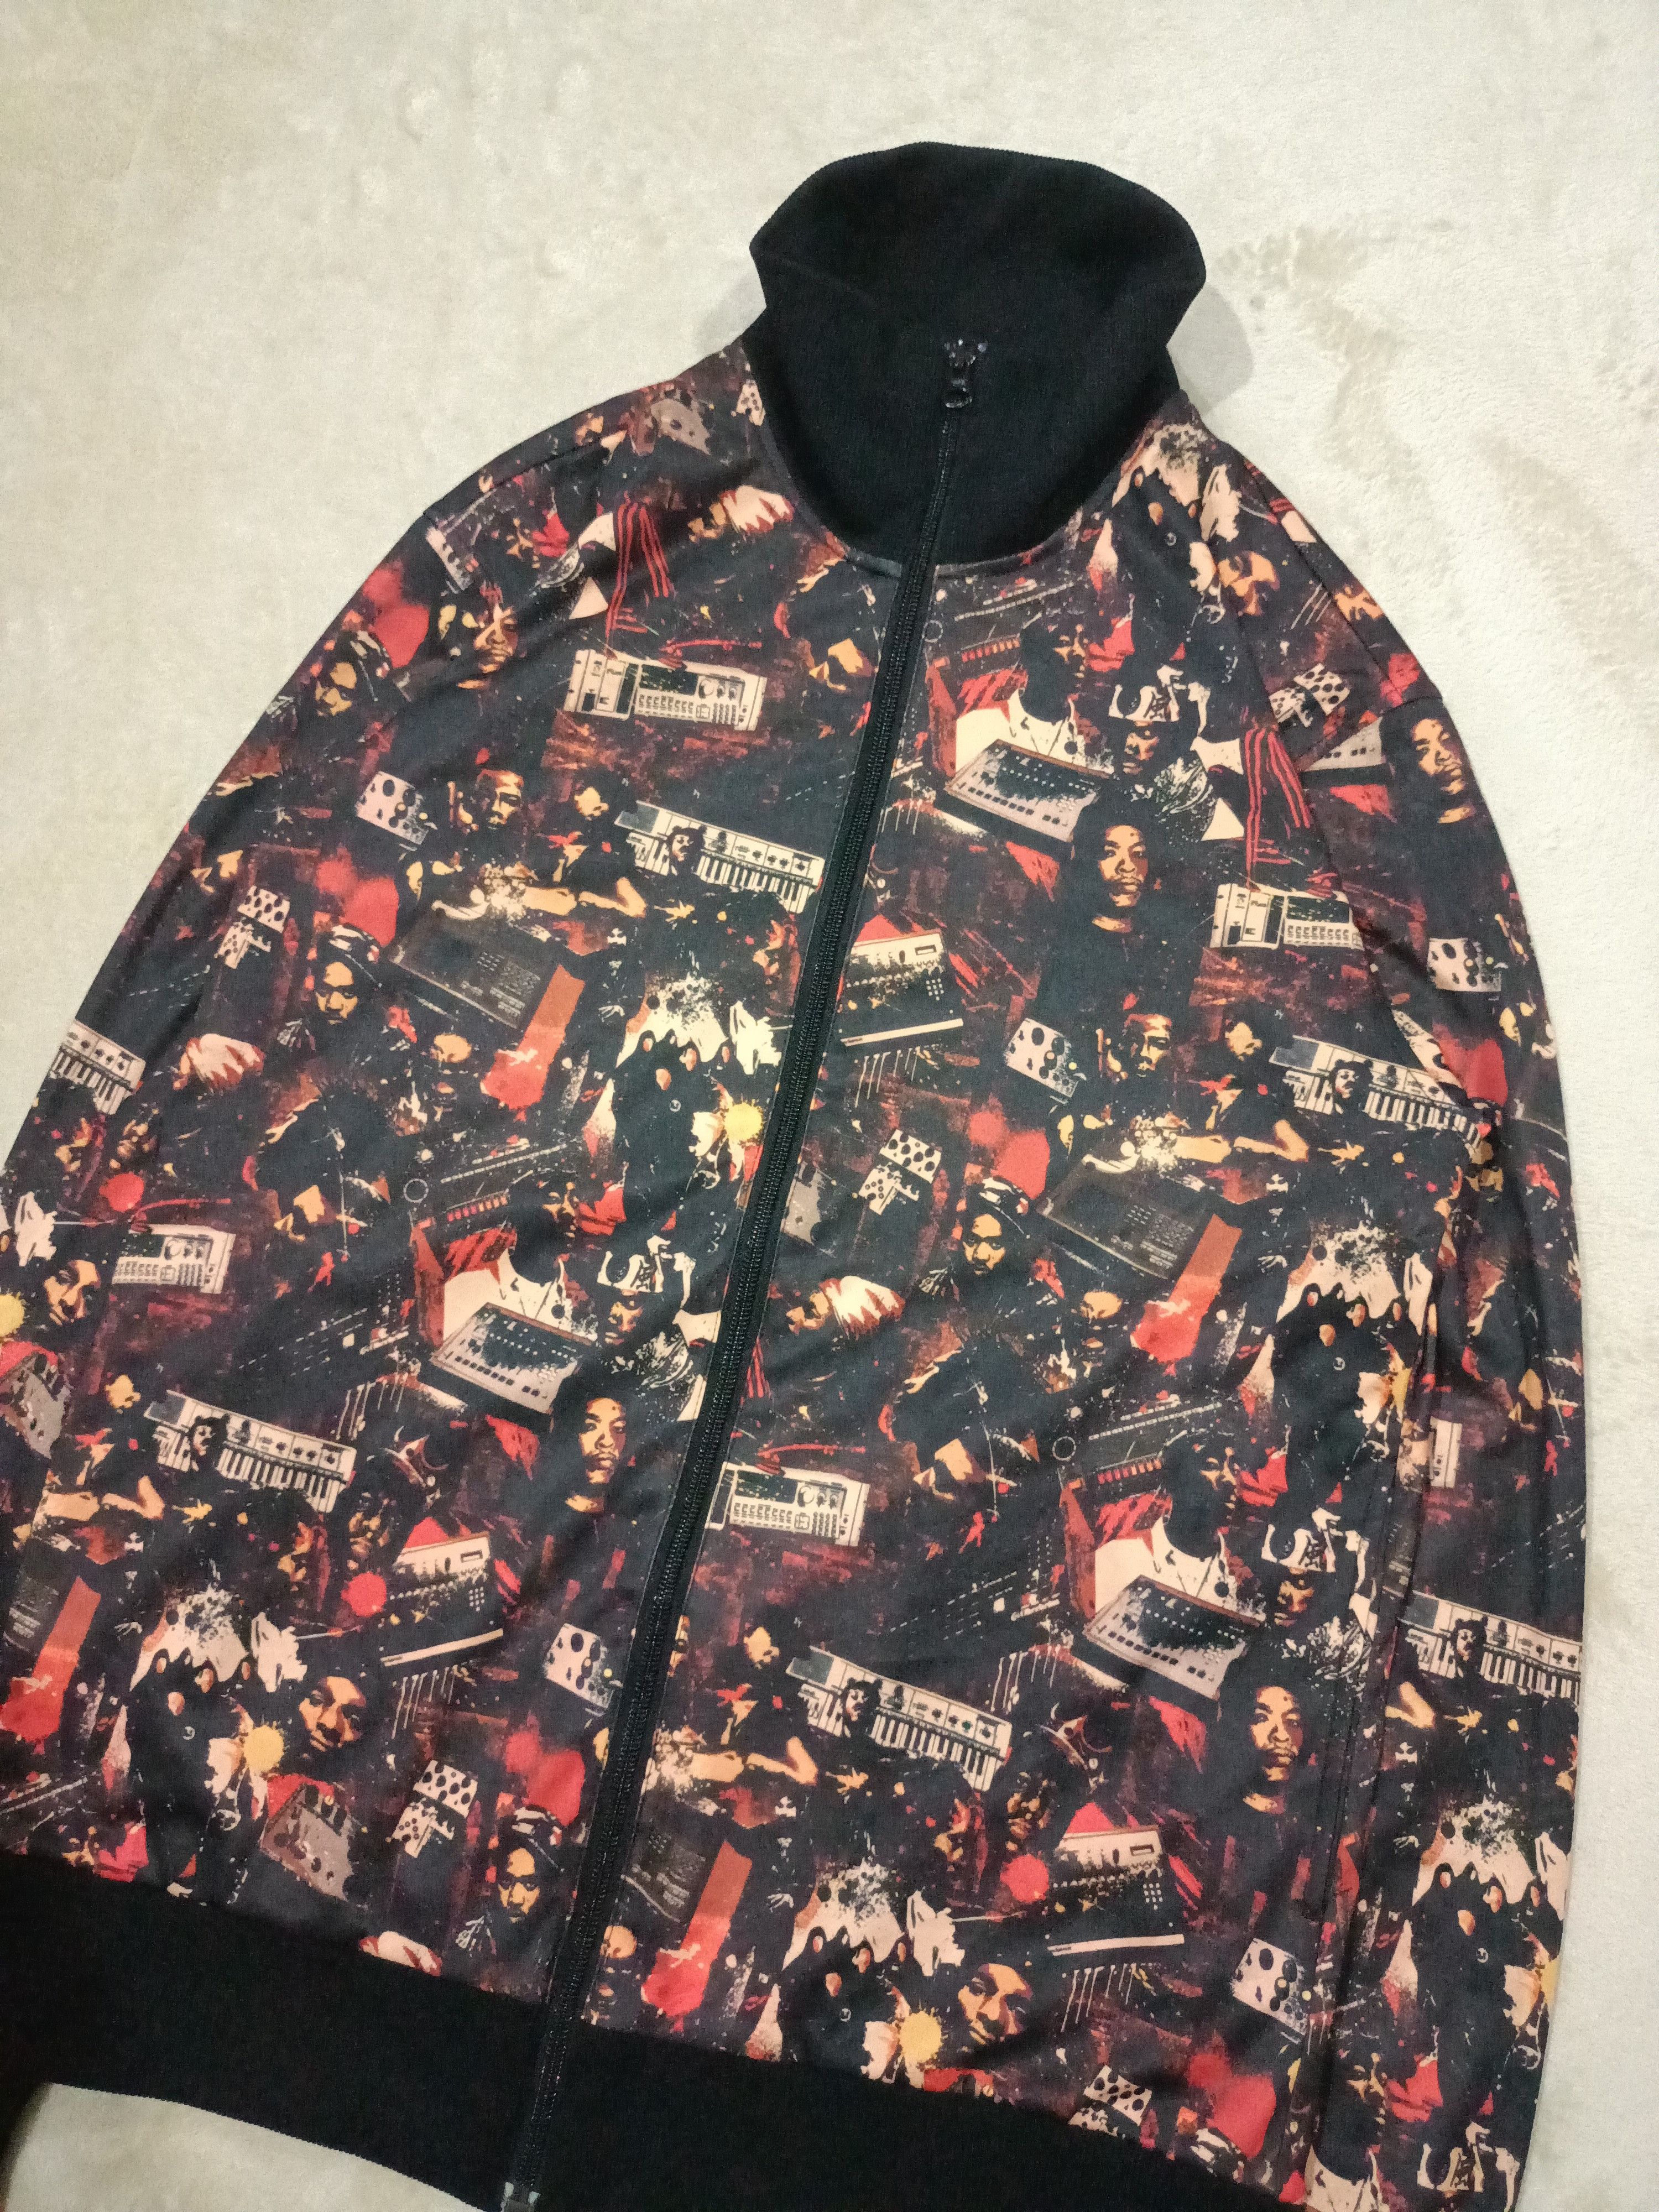 Archival Clothing - Applebum Nine Rulaz Line Fullprint 90s Artist Rapper Jacket - 4